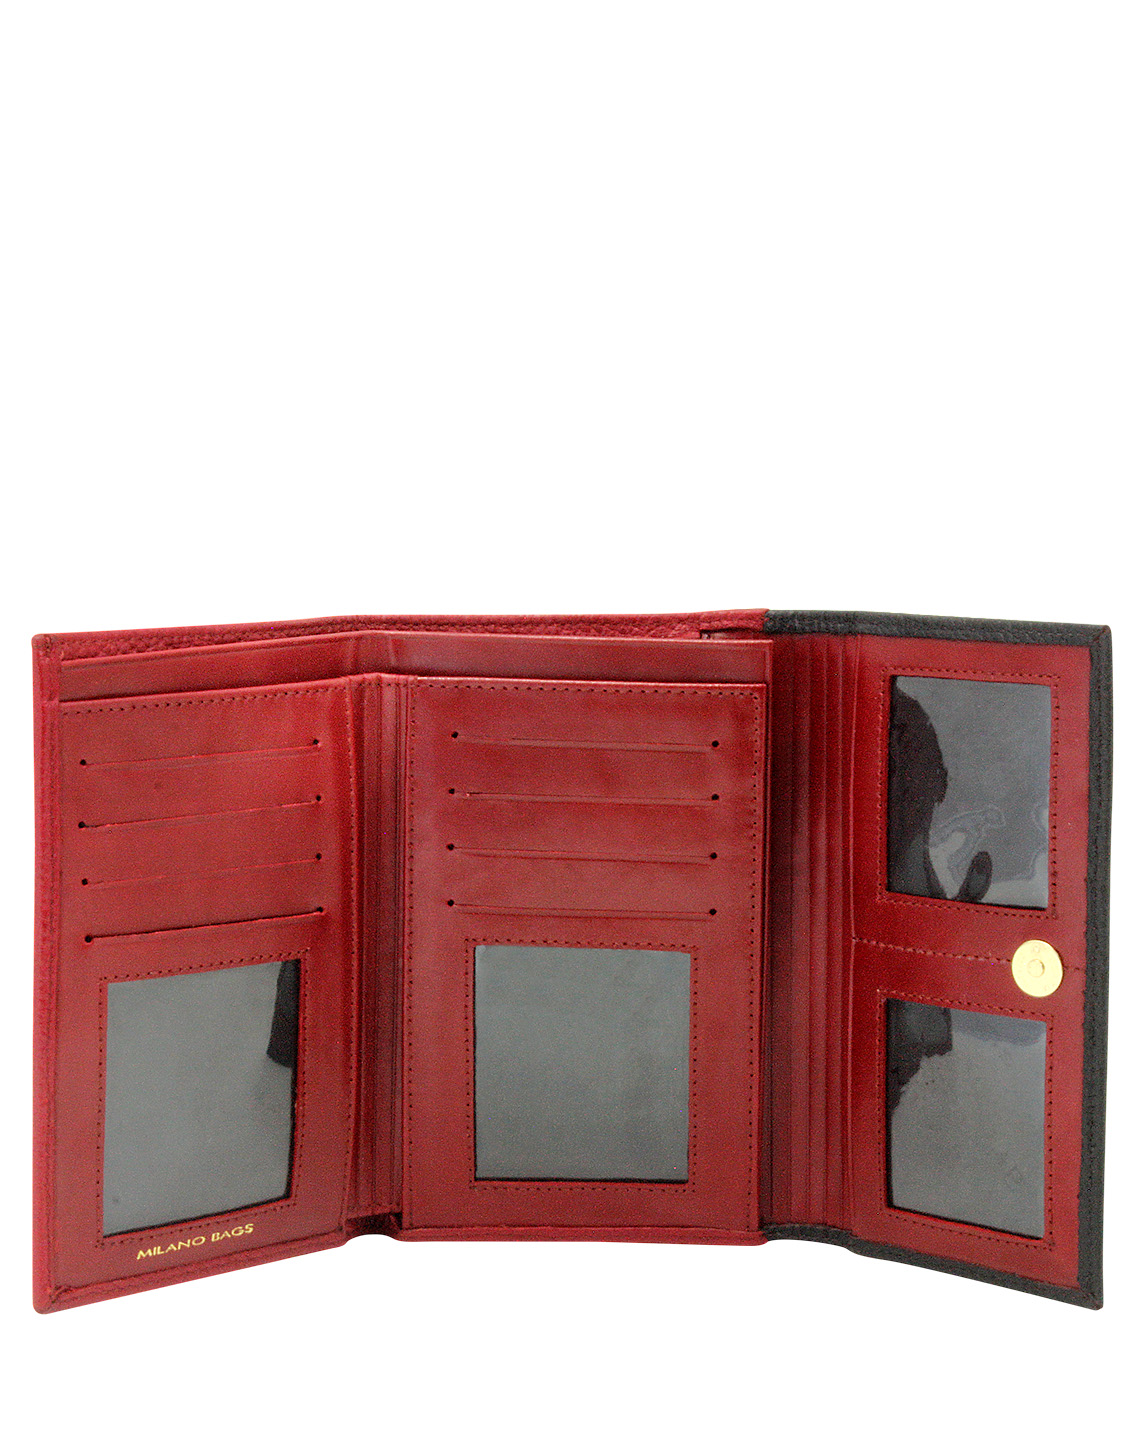 Billetera de Mujer BM-473 Color Rojo